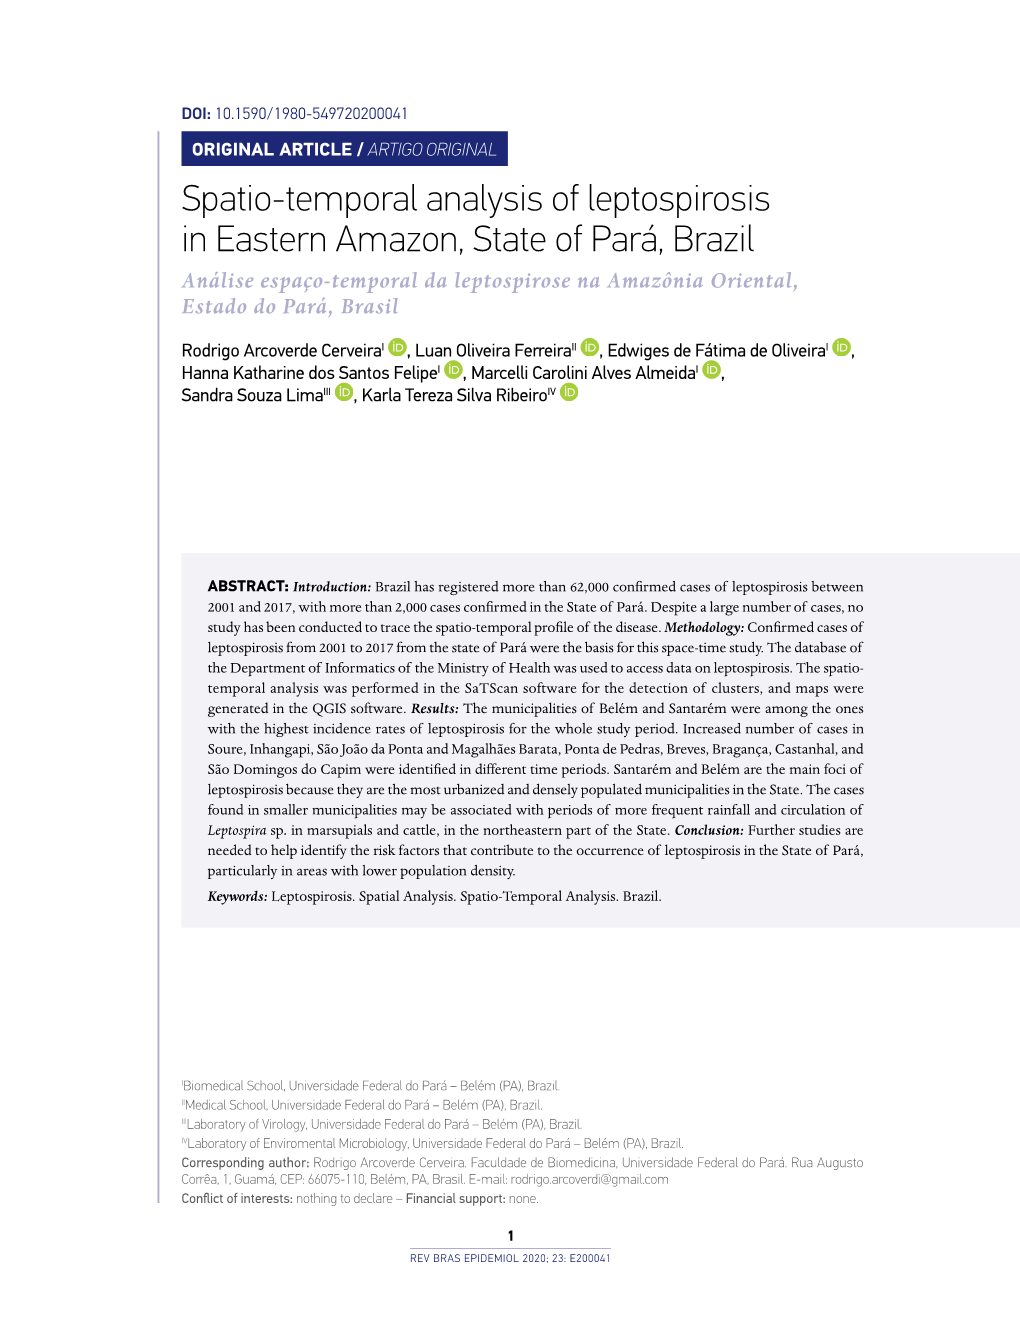 Spatio-Temporal Analysis of Leptospirosis in Eastern Amazon